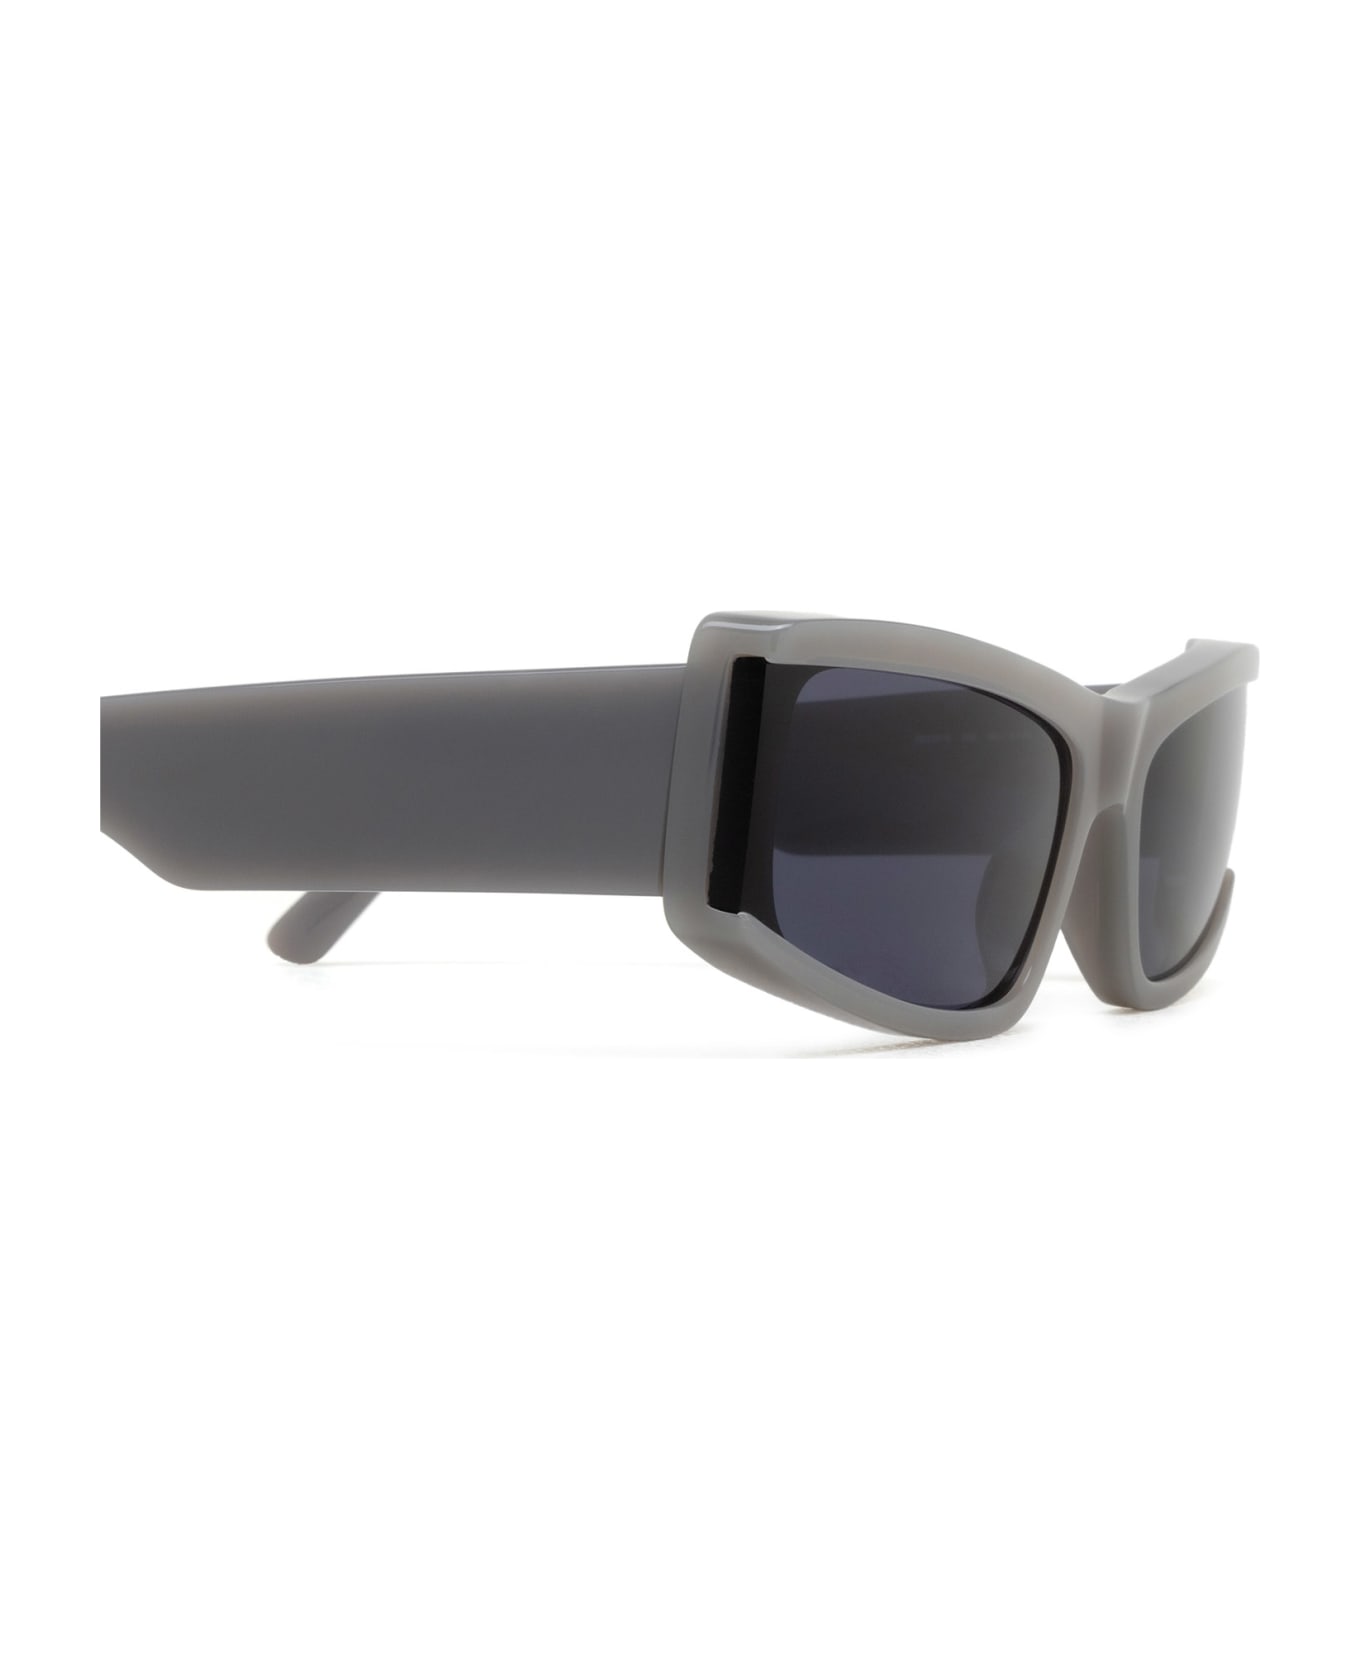 Balenciaga Eyewear Bb0301s Sunglasses - Grey